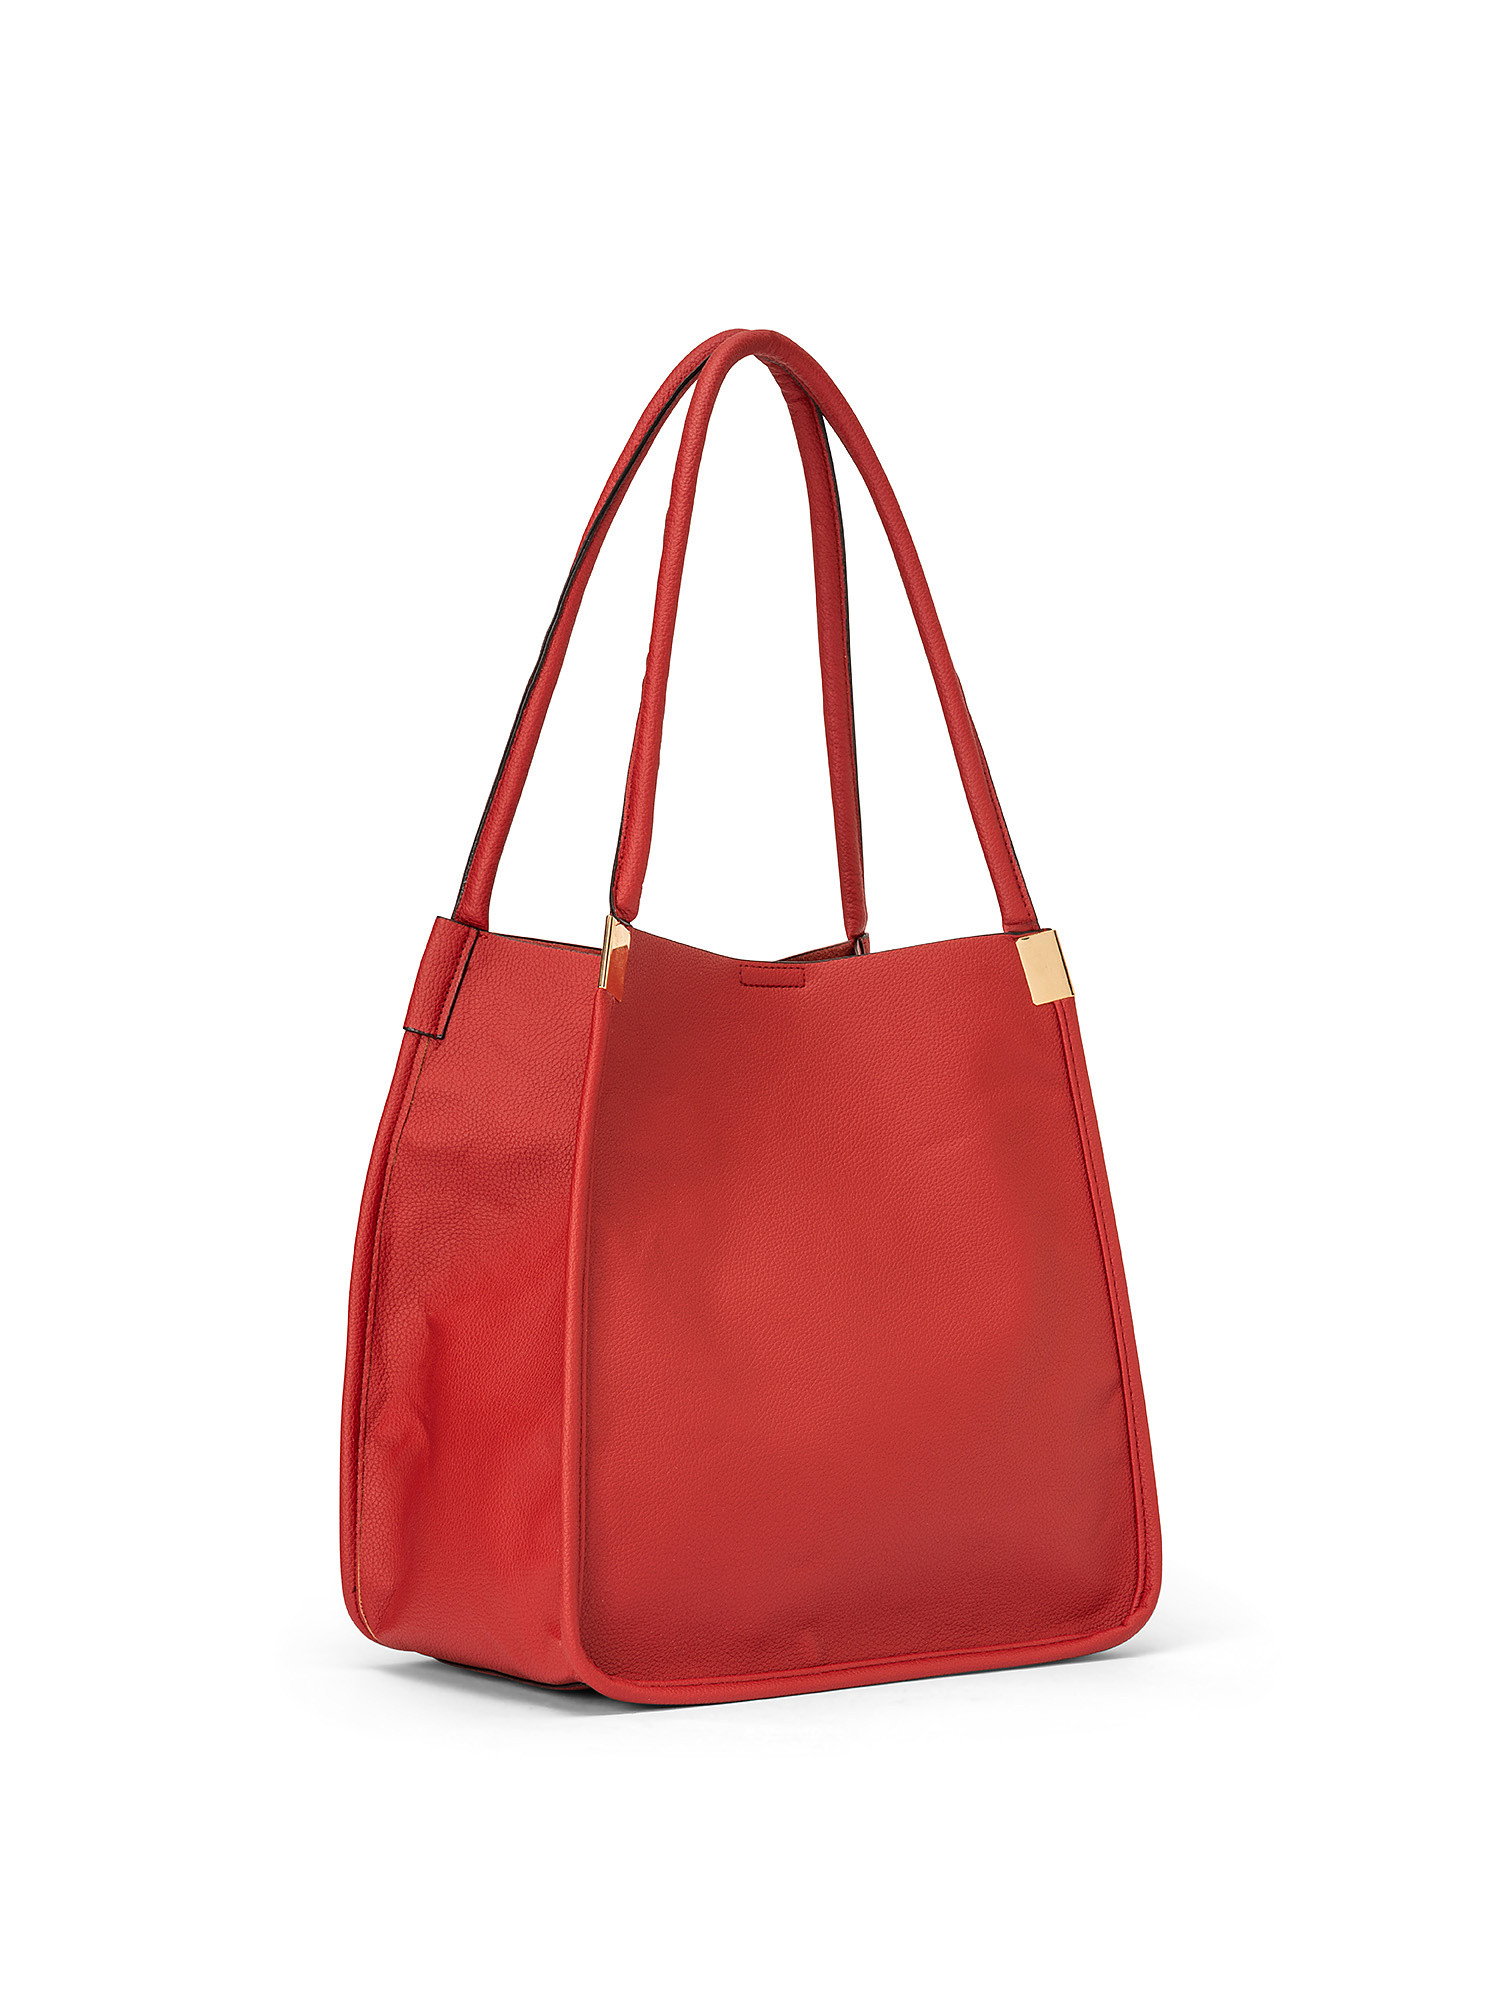 Shopping bag, Red, large image number 1